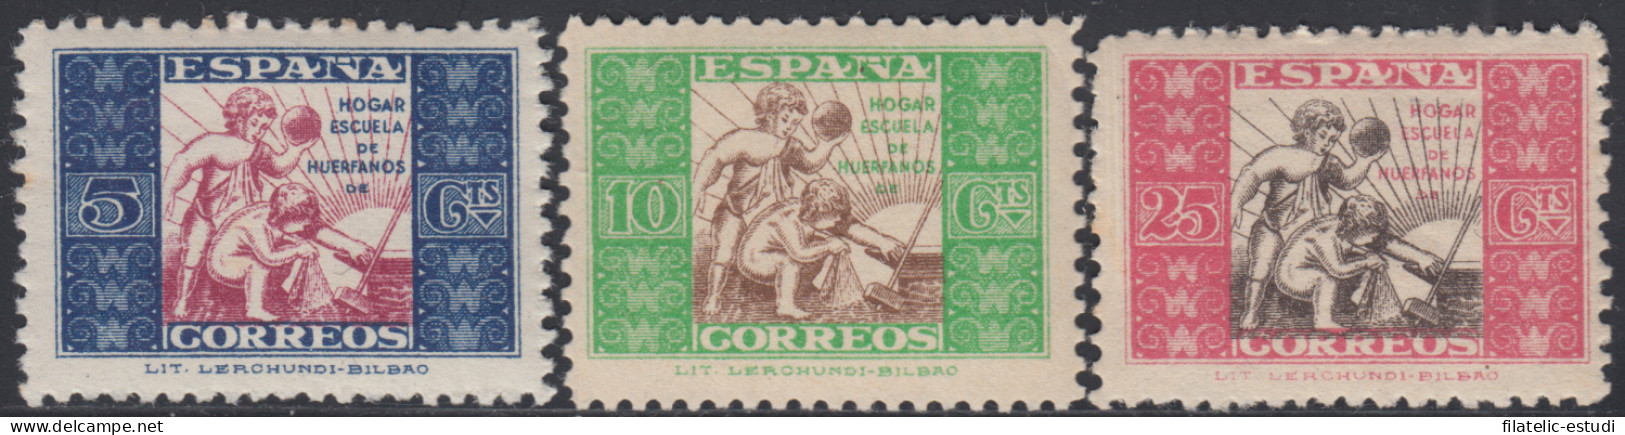 España Spain Beneficencia Huérfanos Correos 9/11 1937 Infancia MH - Liefdadigheid